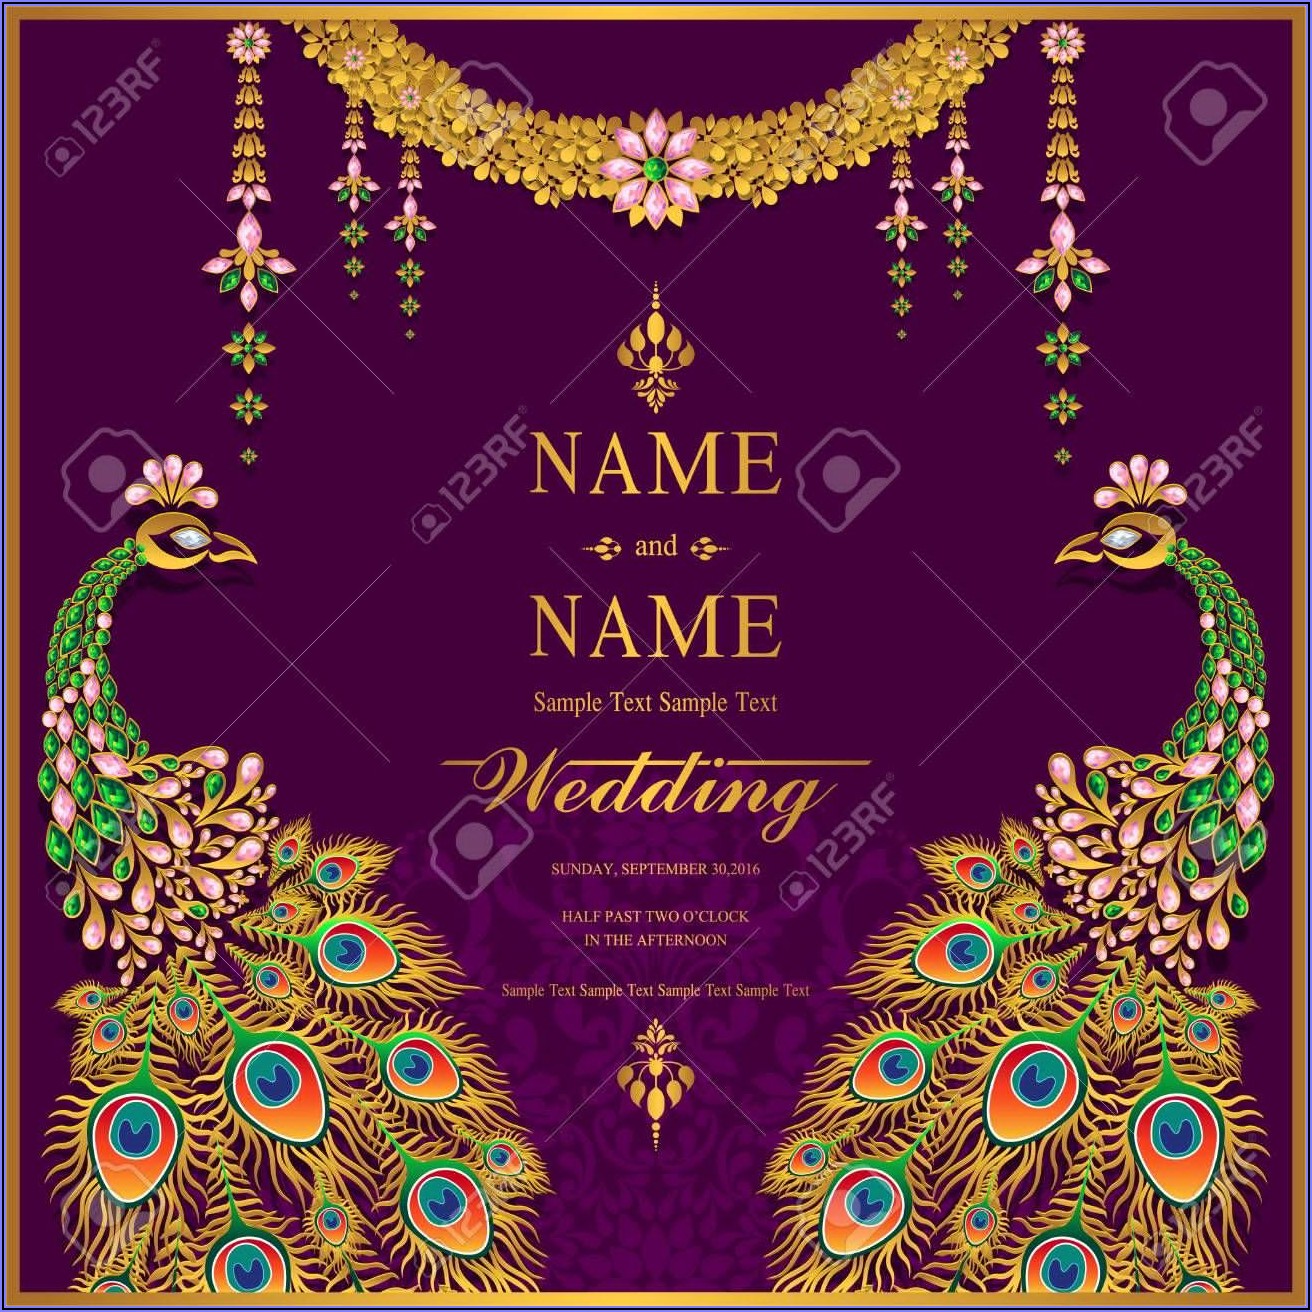 Background Wedding Invitation Card Templates